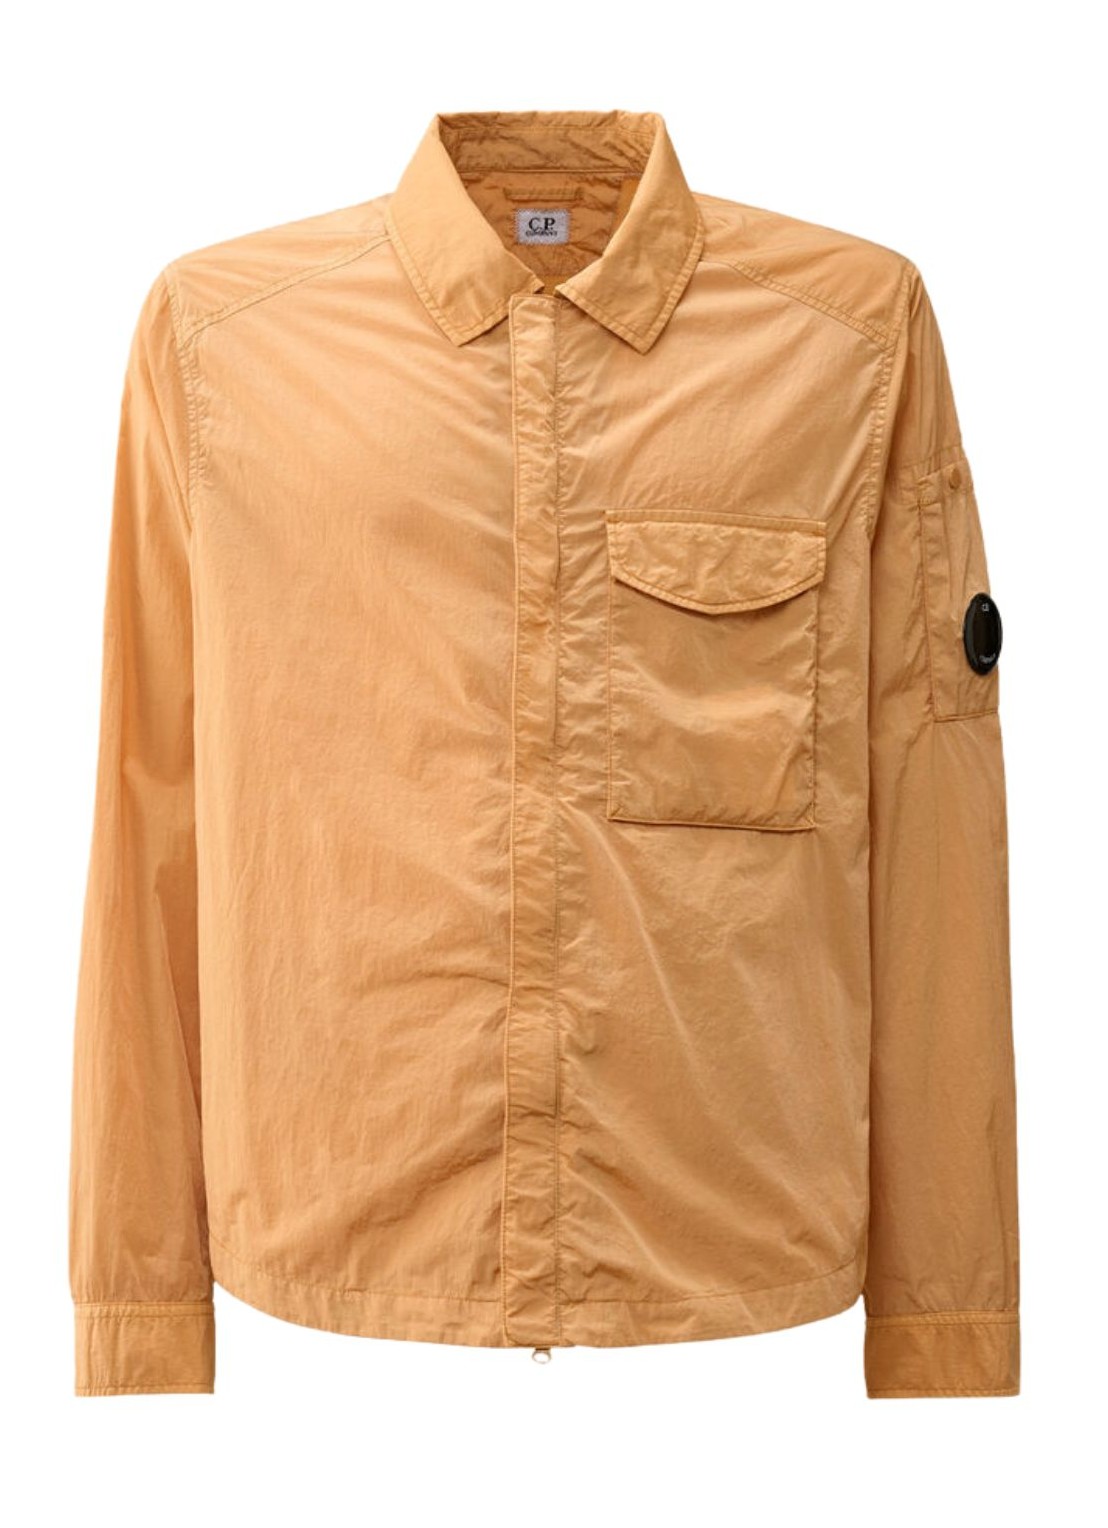 Outerwear c.p.company outerwear man chrome-r pocket overshirt 16cmos039a005904g 437 talla M
 